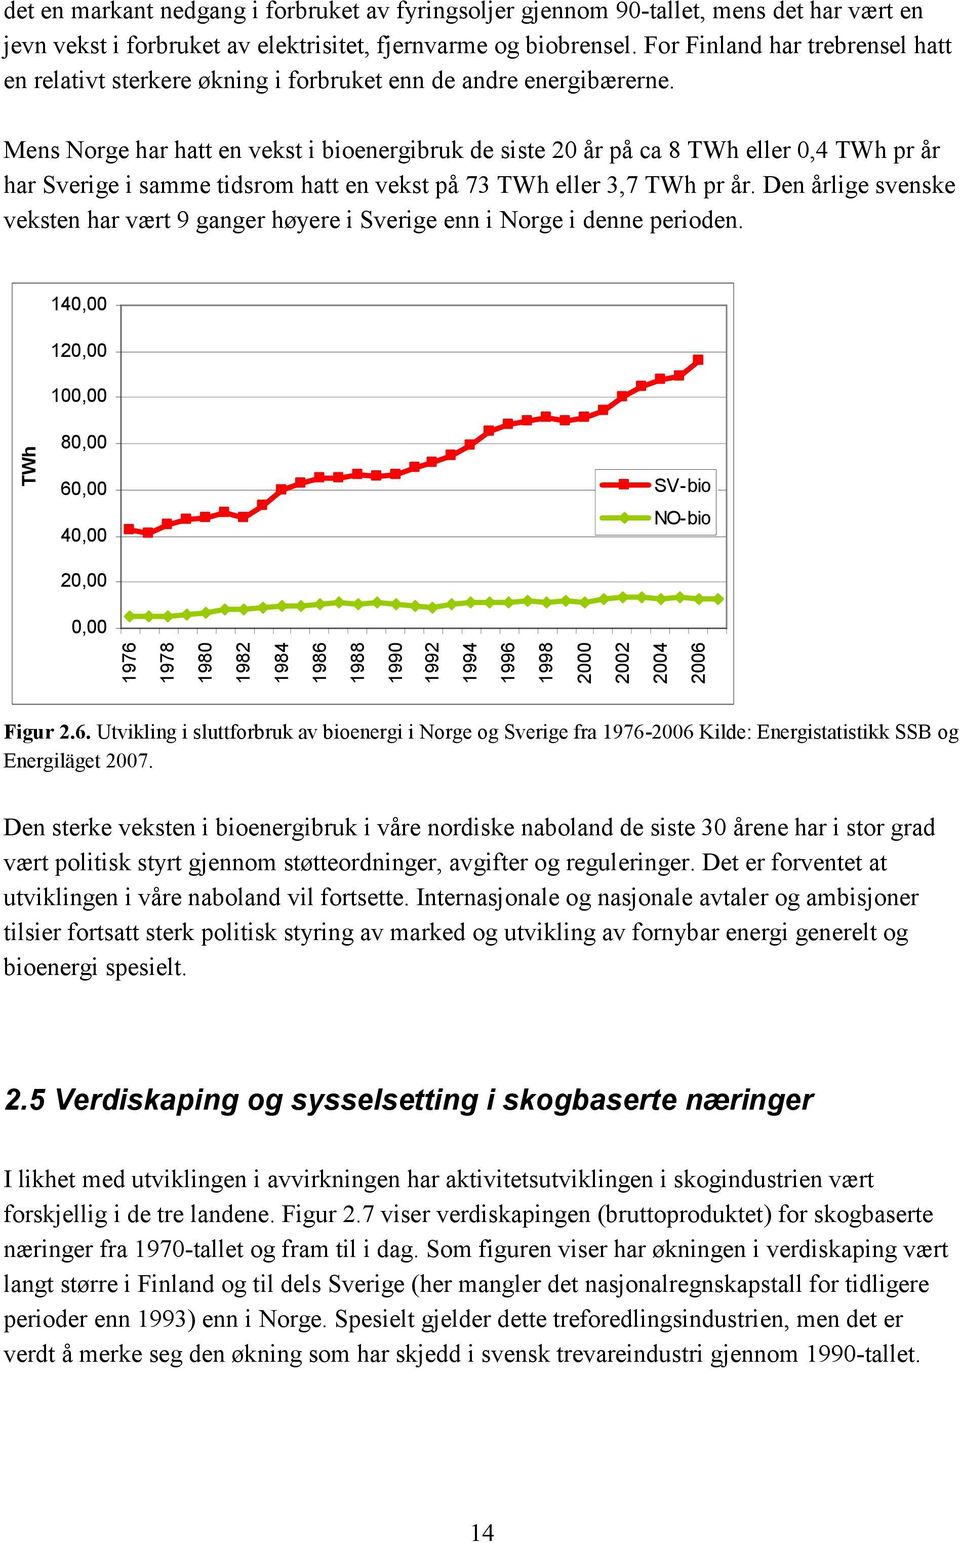 Mens Norge har hatt en vekst i bioenergibruk de siste 20 år på ca 8 TWh eller 0,4 TWh pr år har Sverige i samme tidsrom hatt en vekst på 73 TWh eller 3,7 TWh pr år.